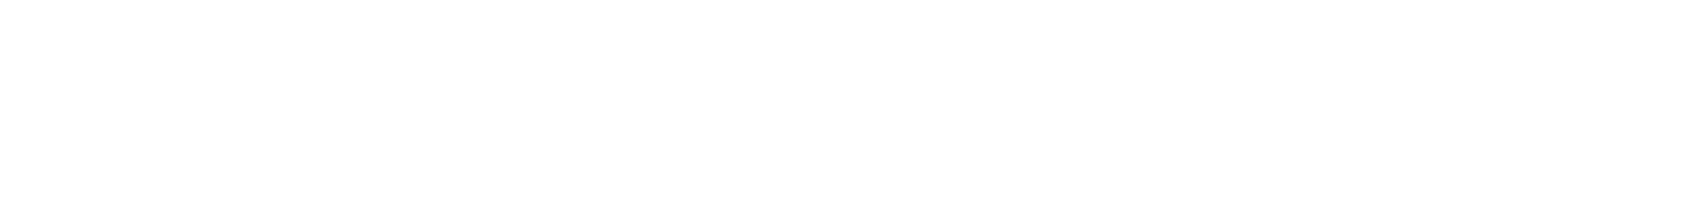 BetBattle Logo